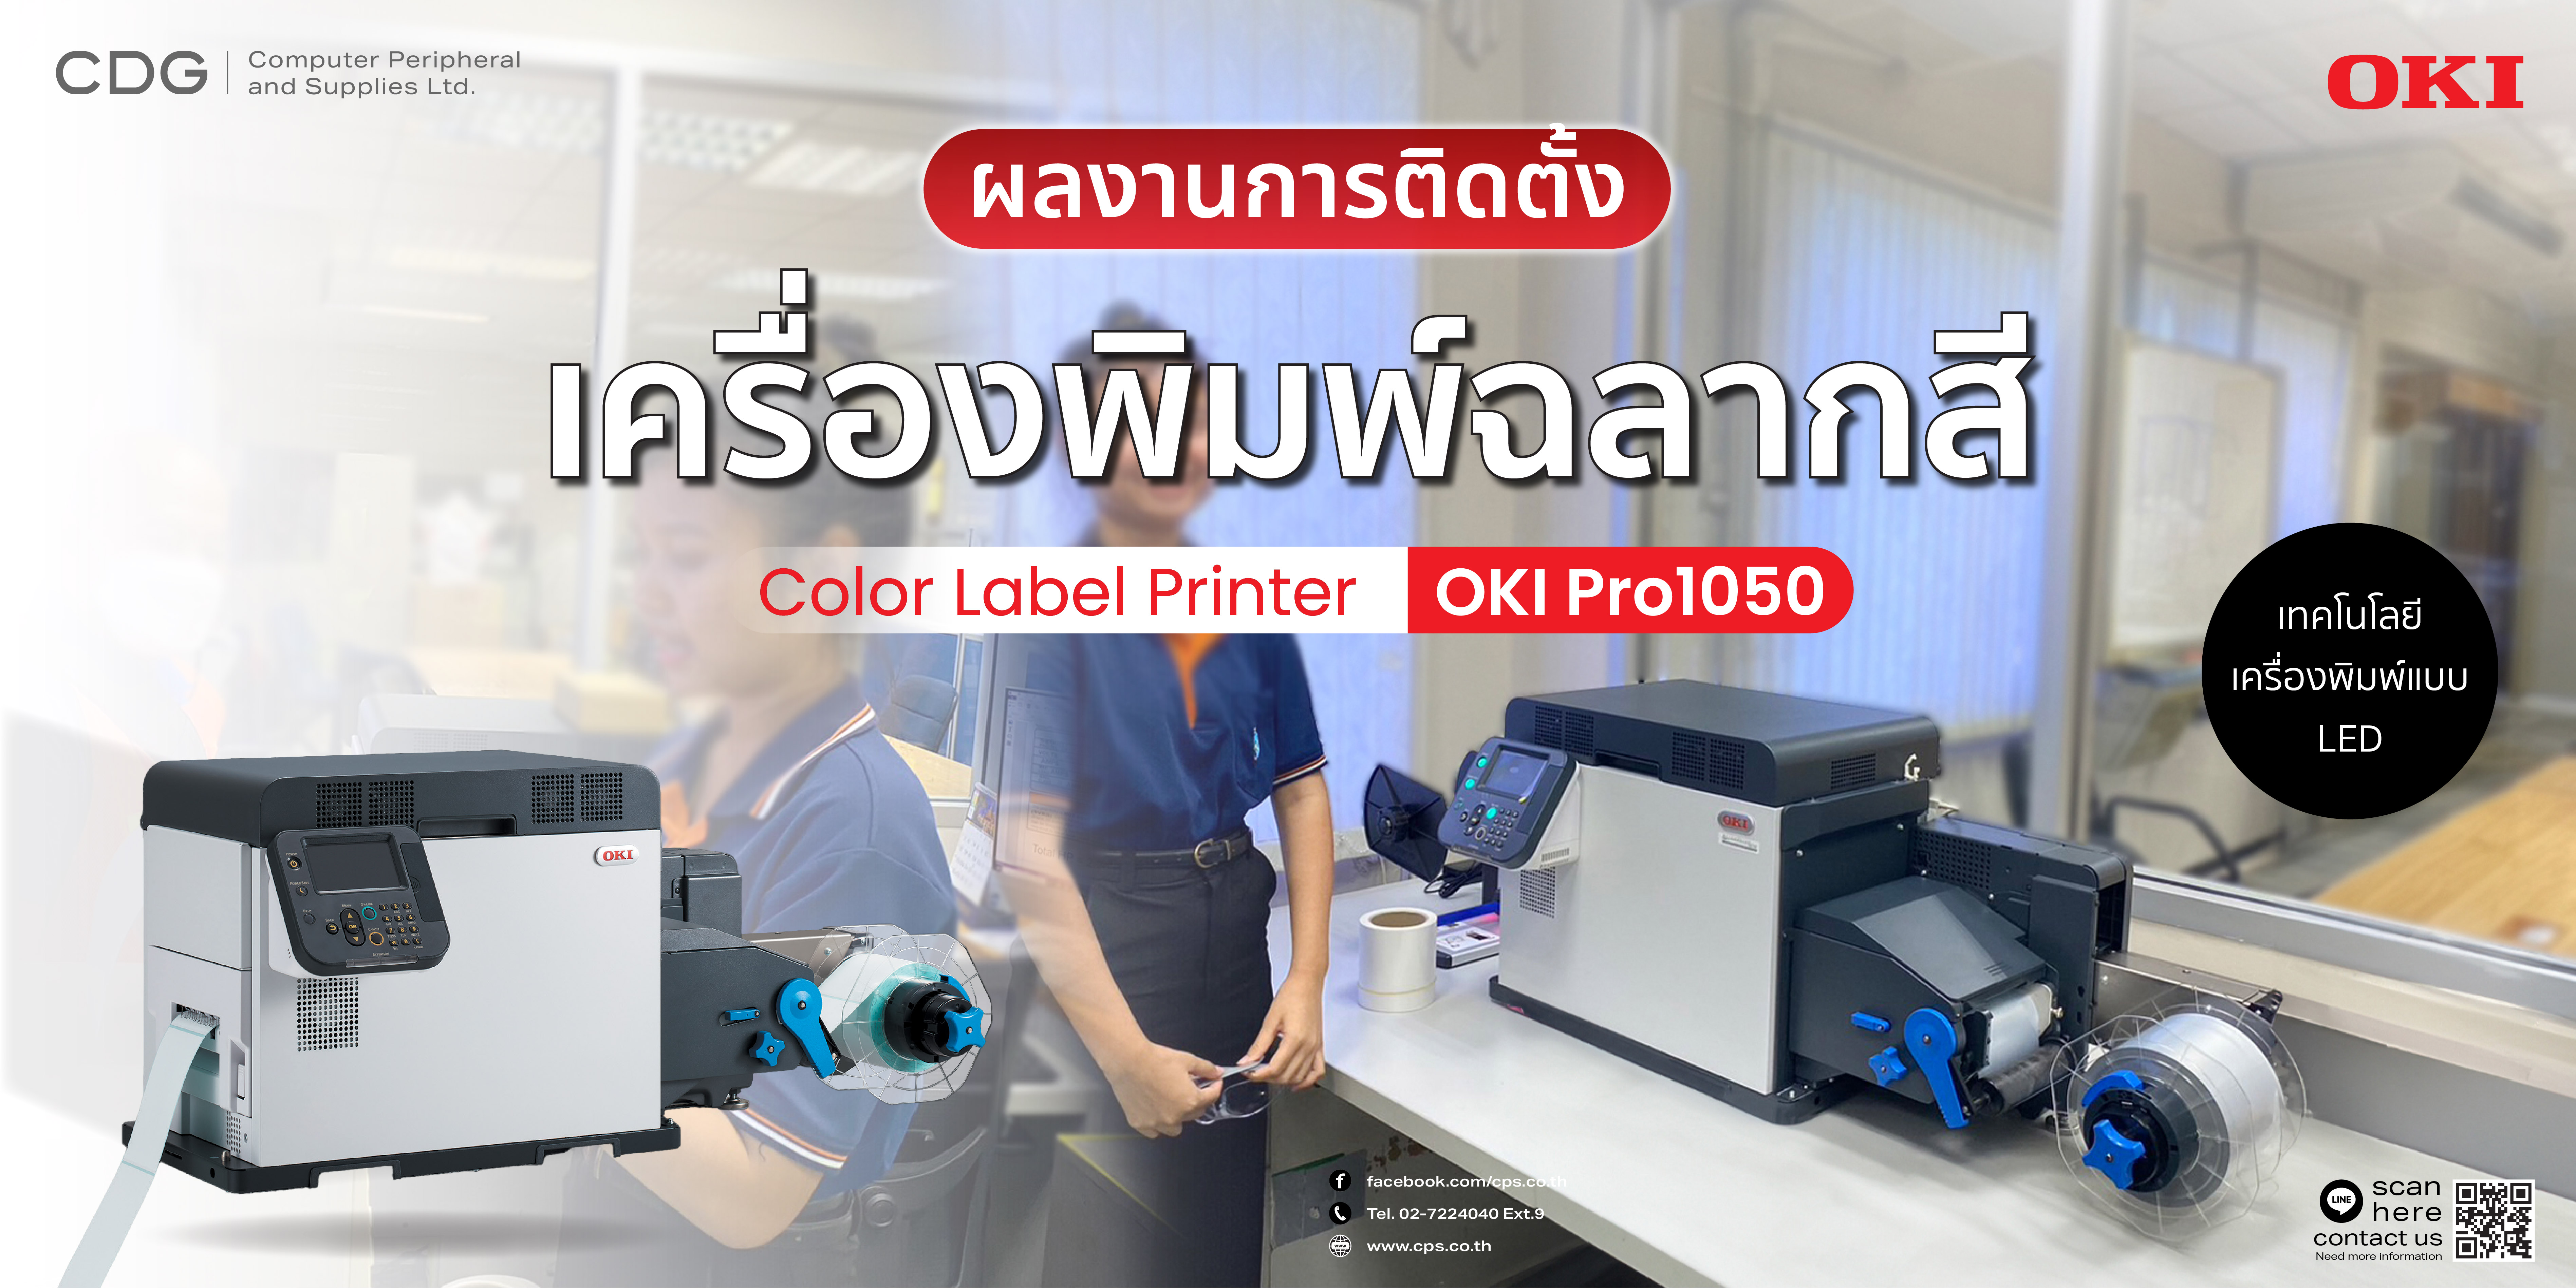 OKI Pro1050